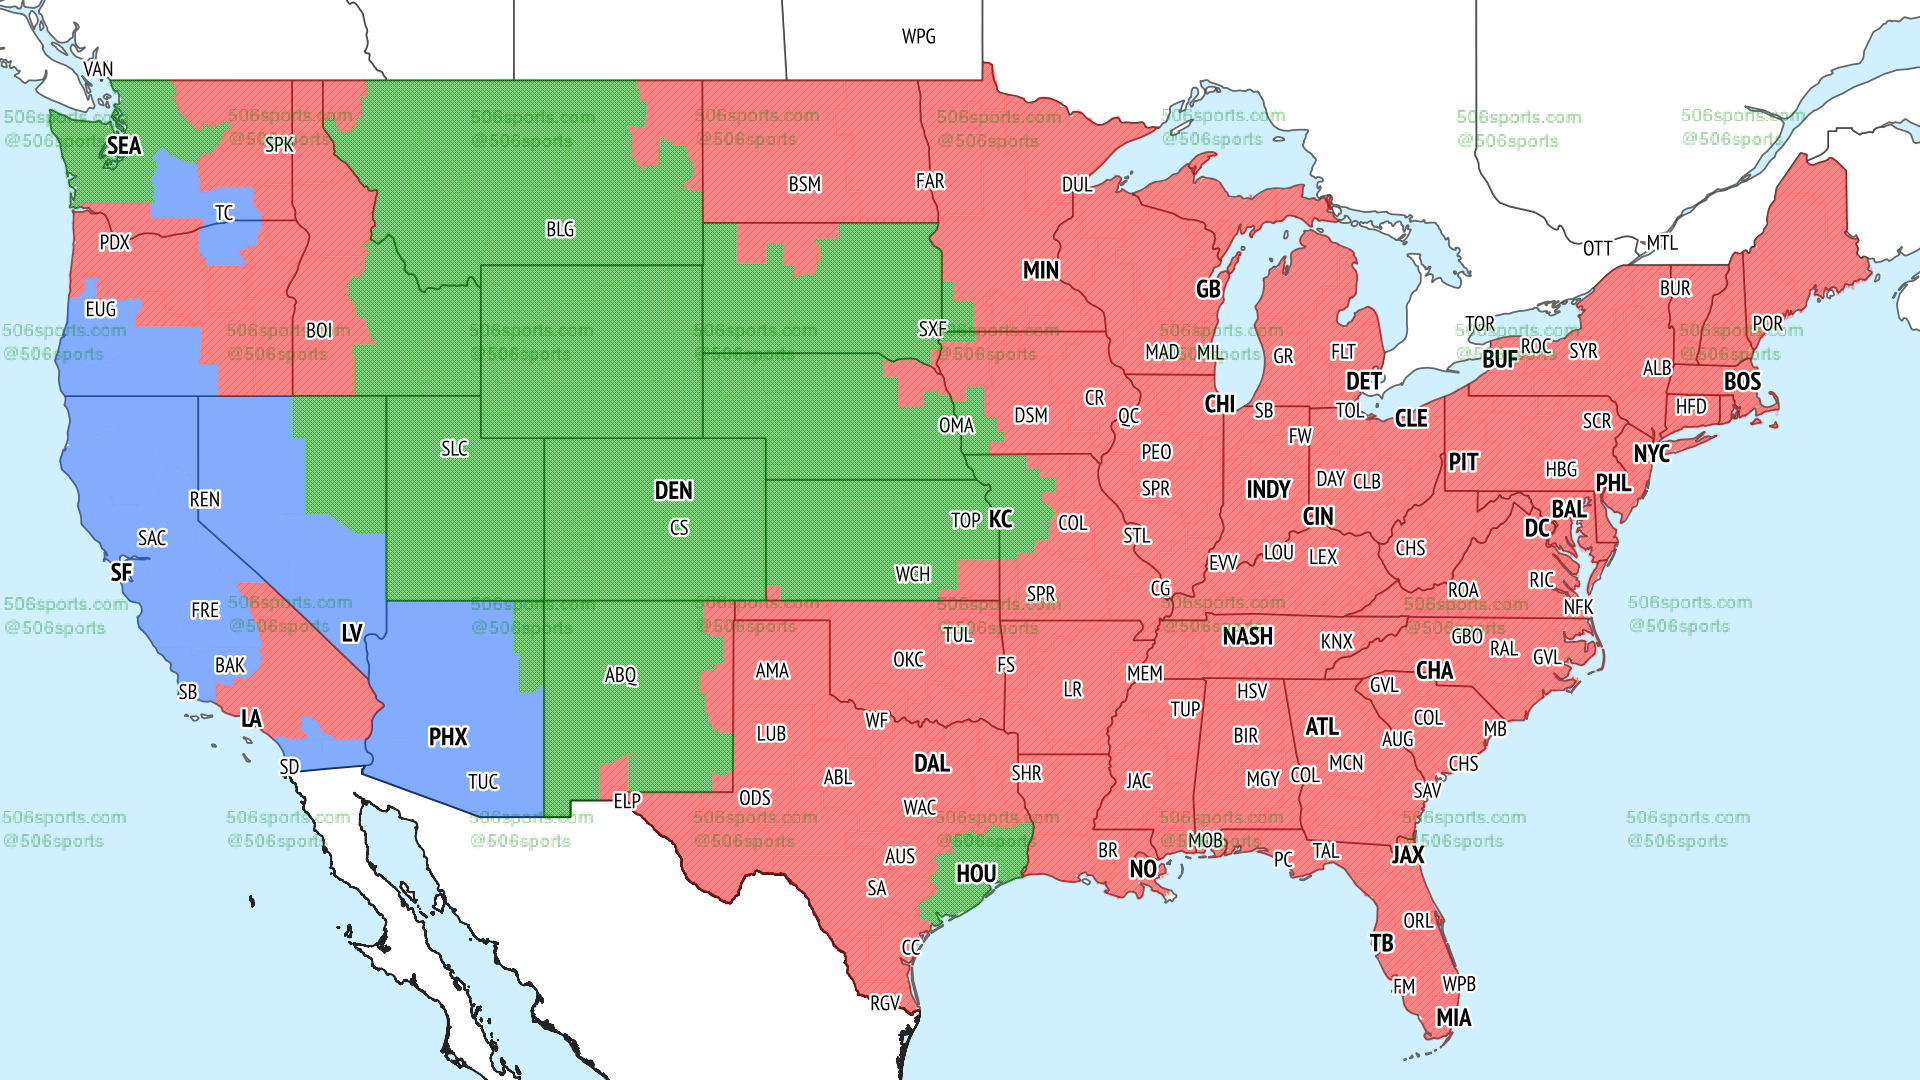 NFL Week 1 Coverage Maps